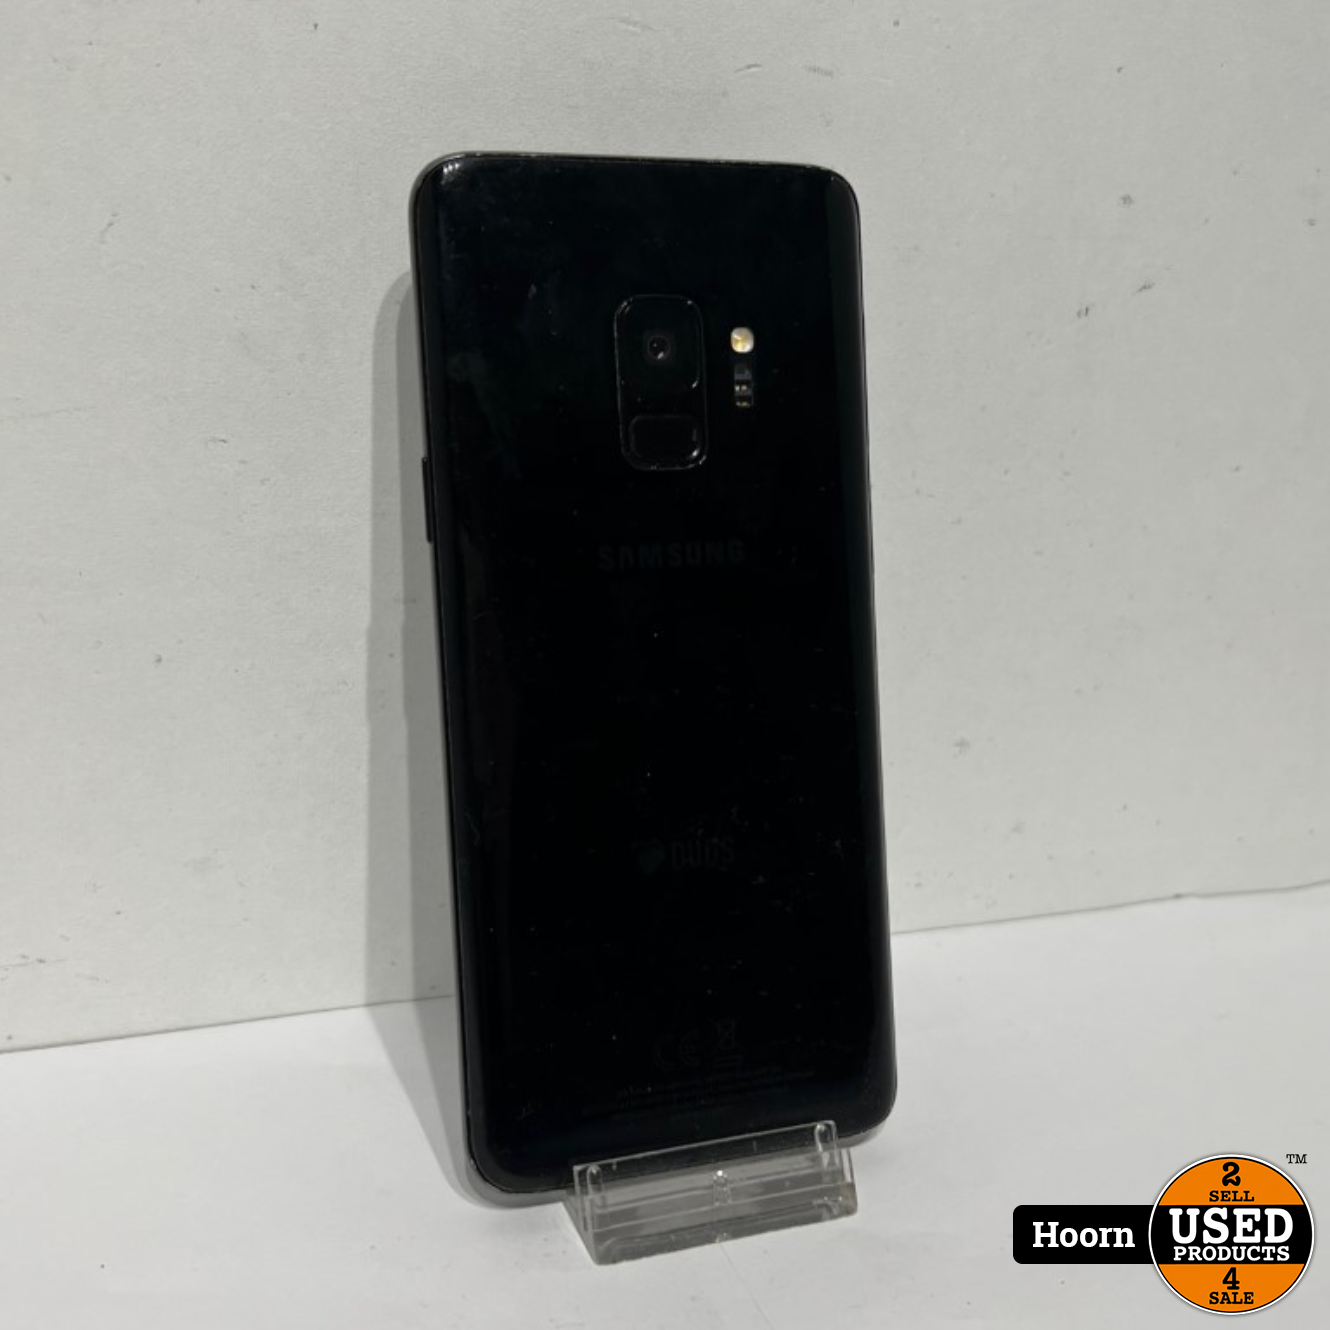 samsung Samsung Galaxy S9 Zwart incl. Lader (Pakt Geen Simkaart) Used Products Hoorn